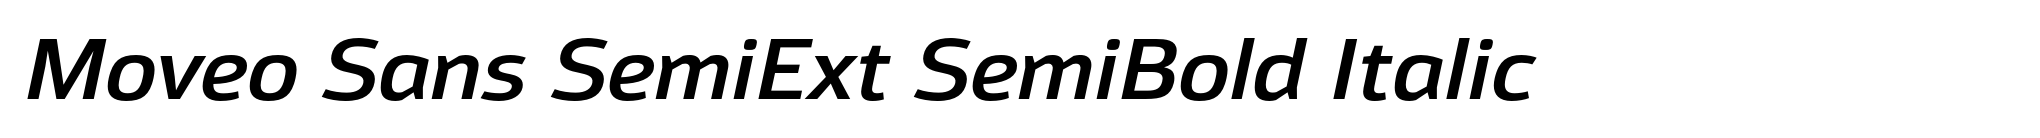 Moveo Sans SemiExt SemiBold Italic image